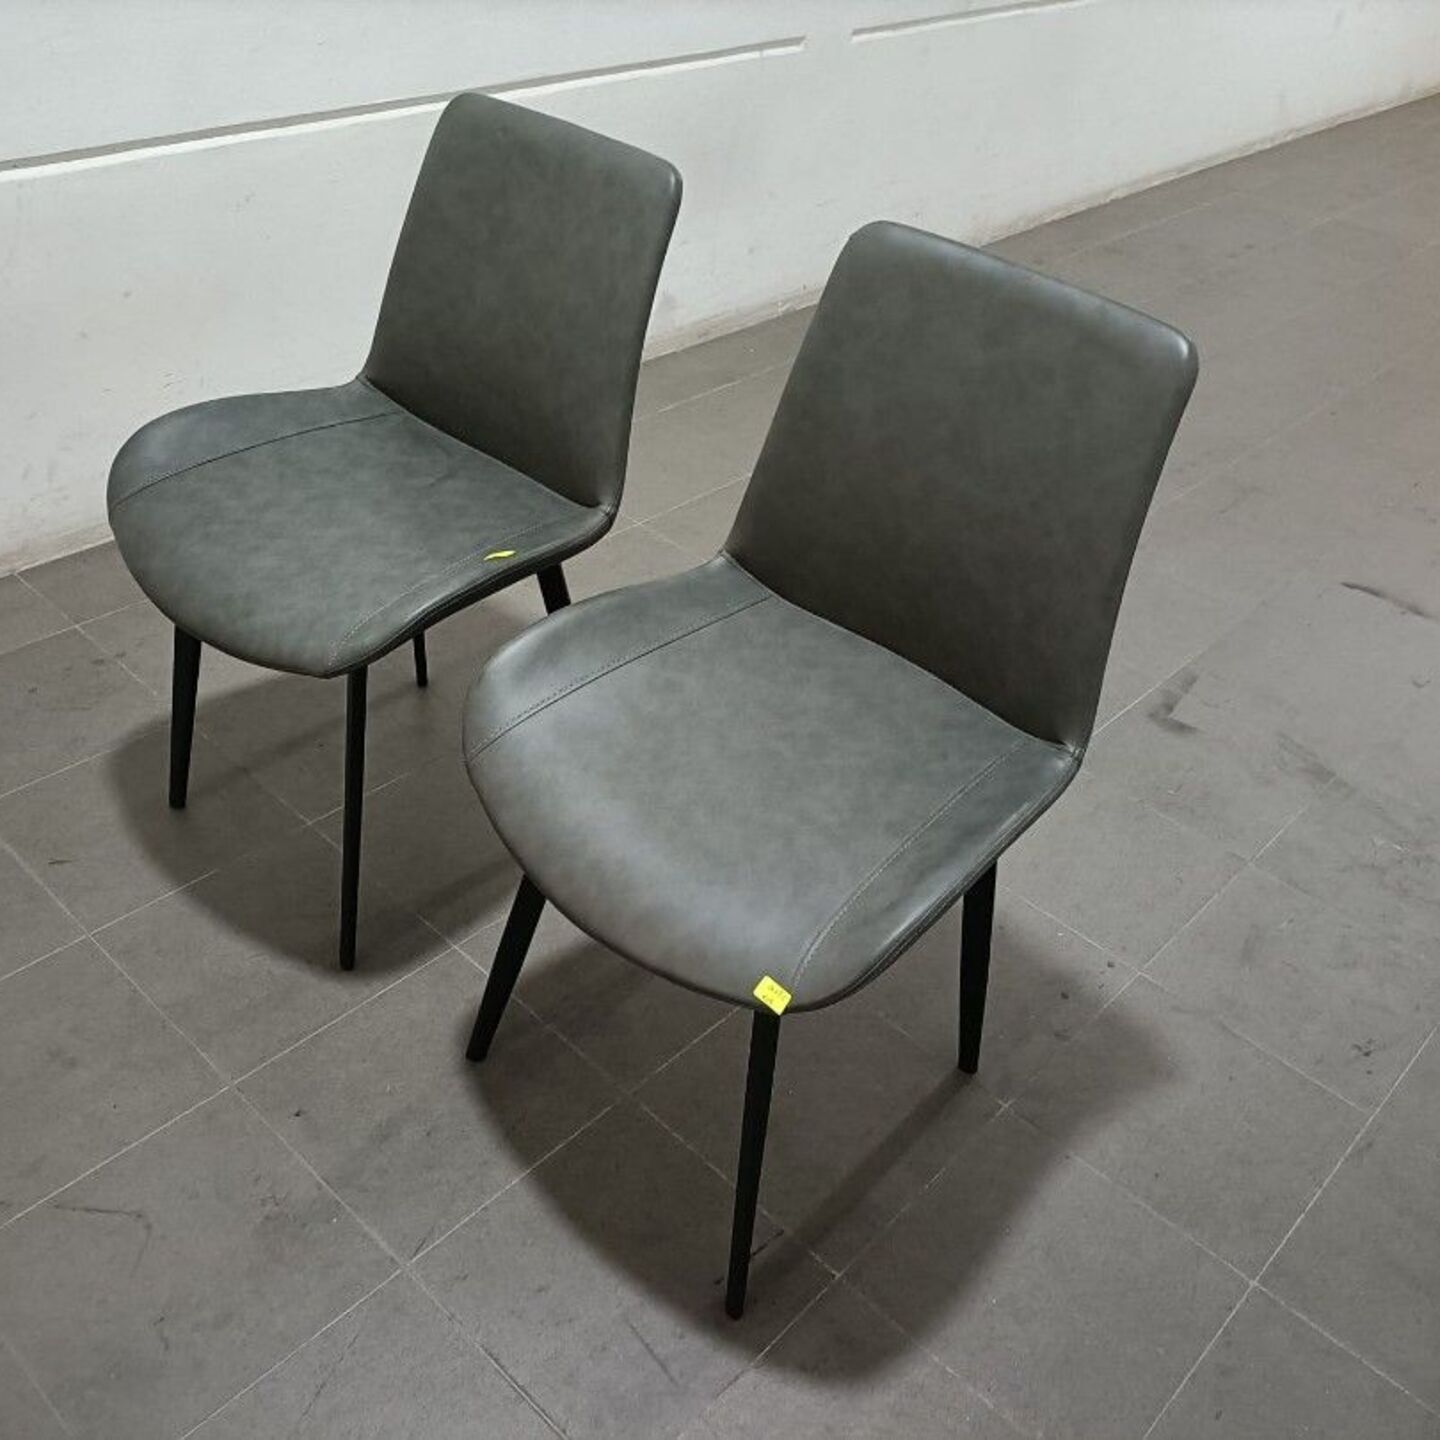 2 x VALORANT Dining Chairs in DARK GREY